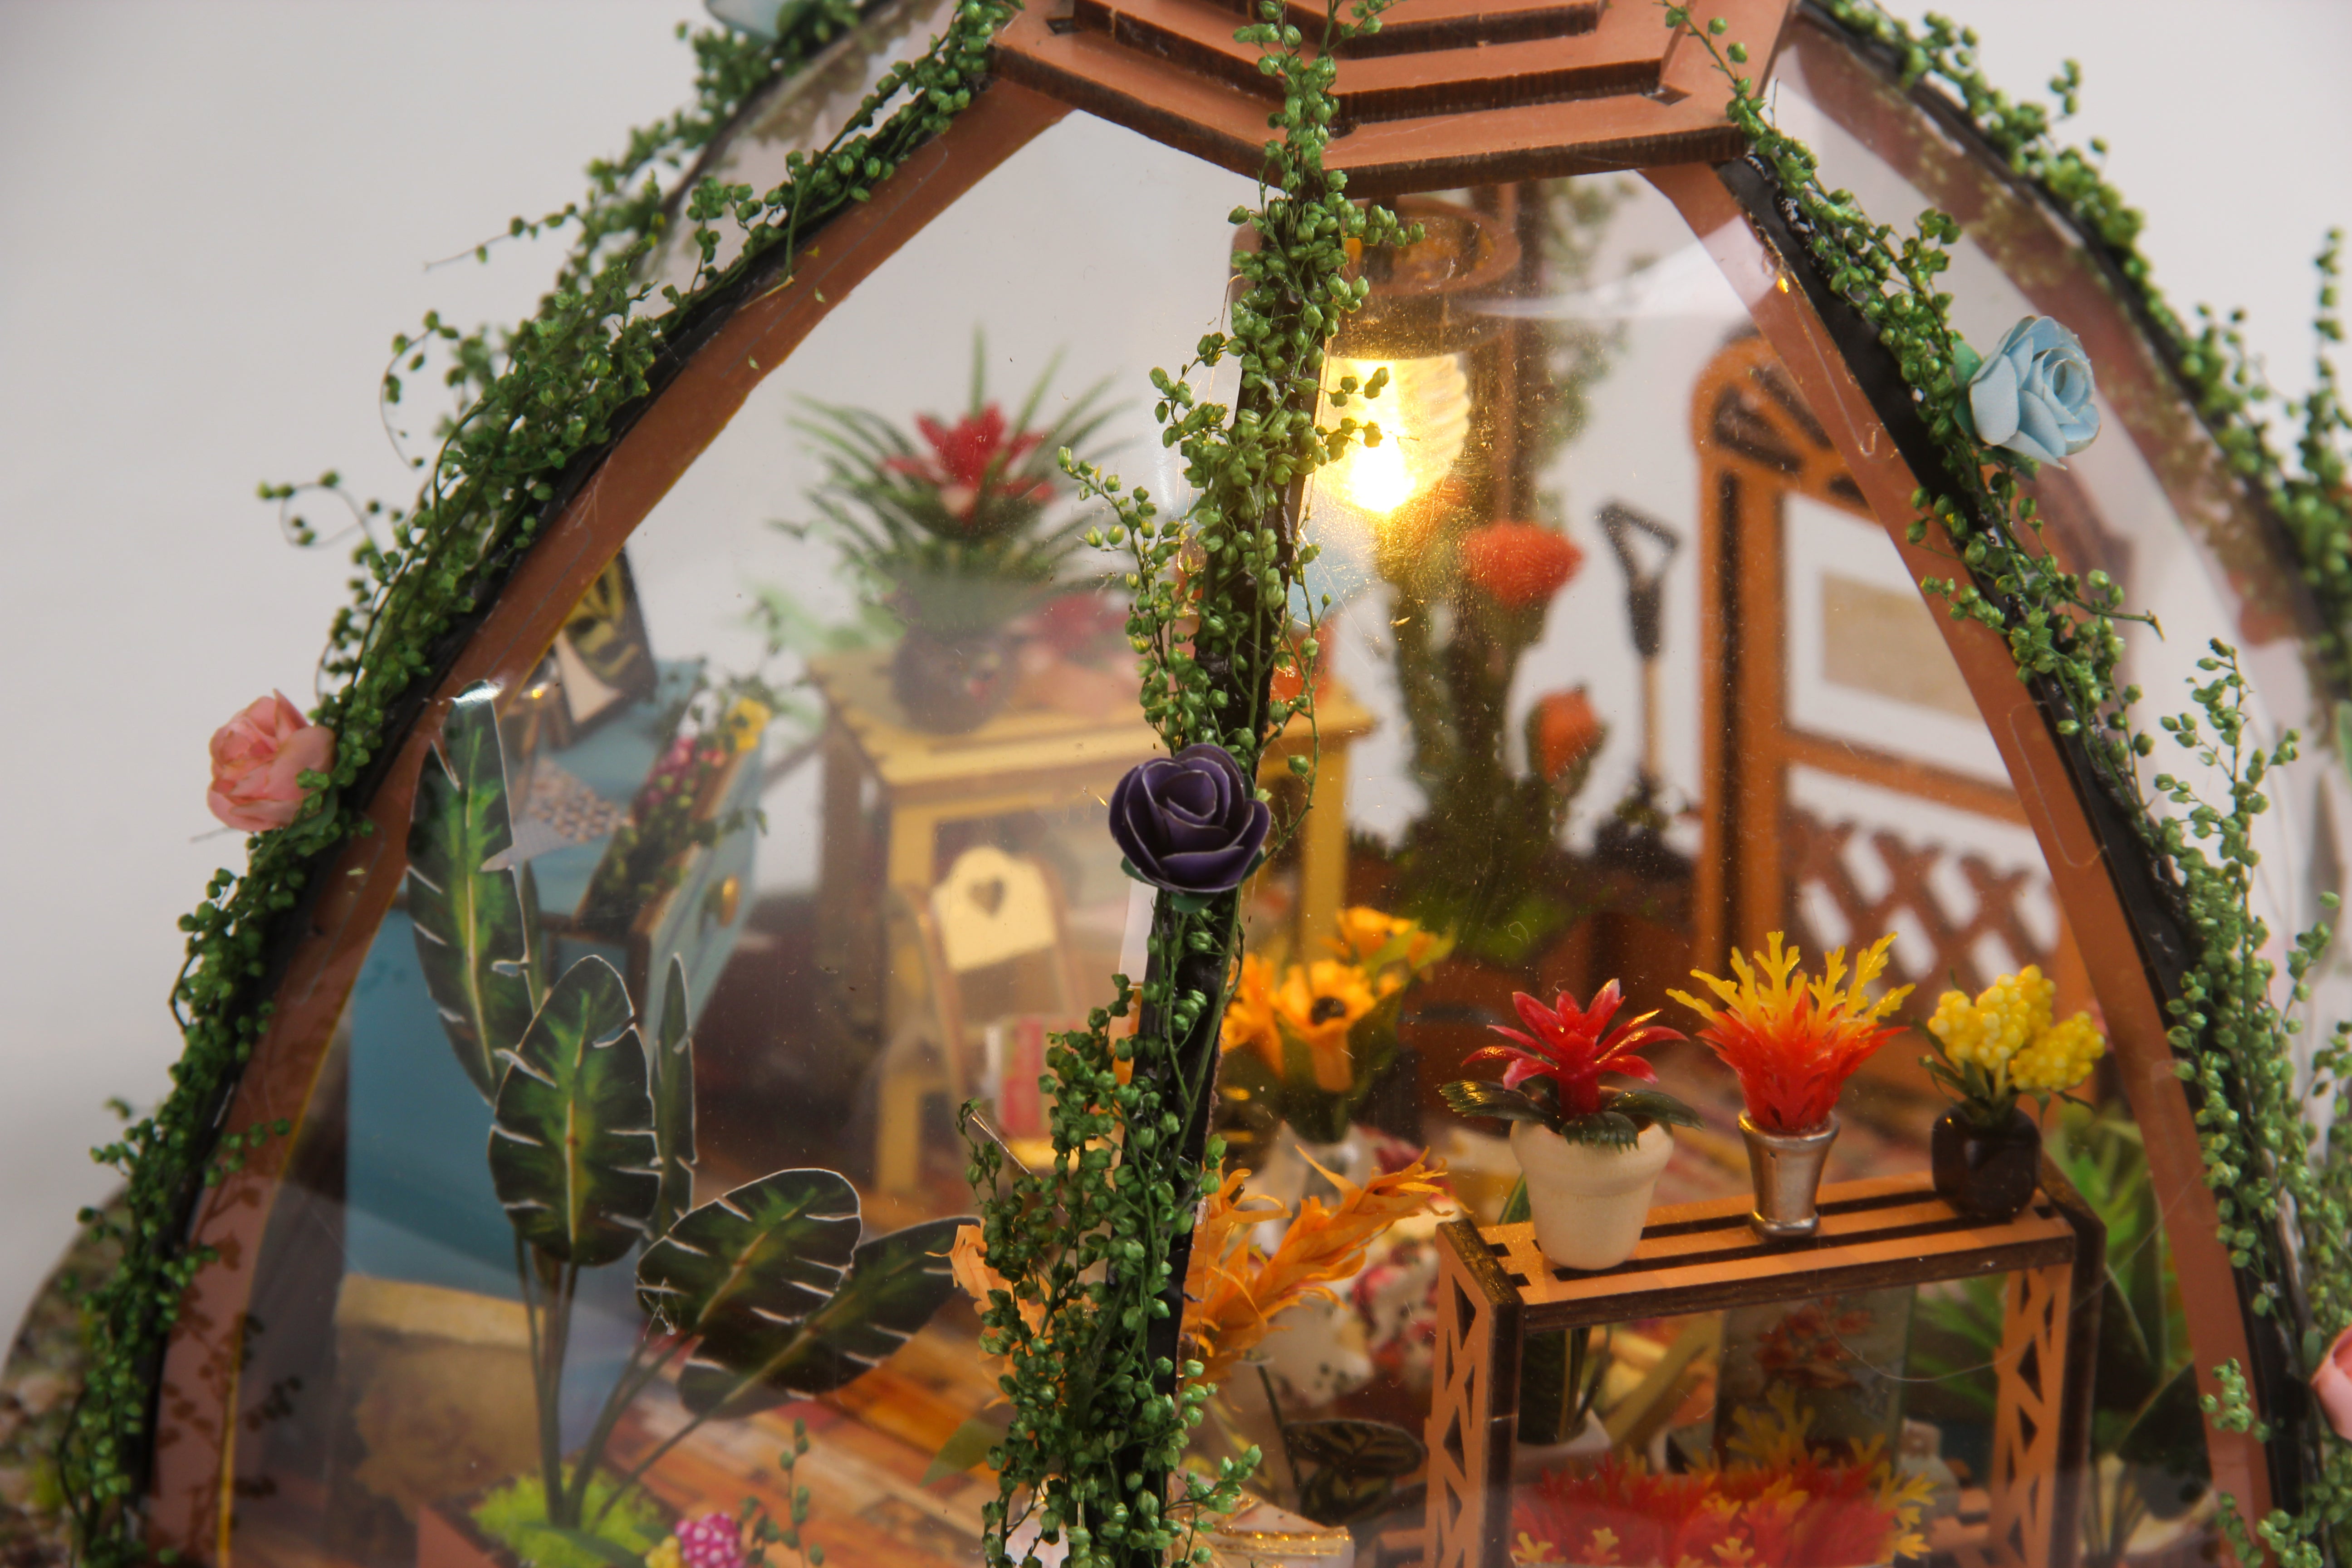 Star Garden Flower House DIY Wooden Dollhouse Kit with Furniture|Birthday Gift | Hobby